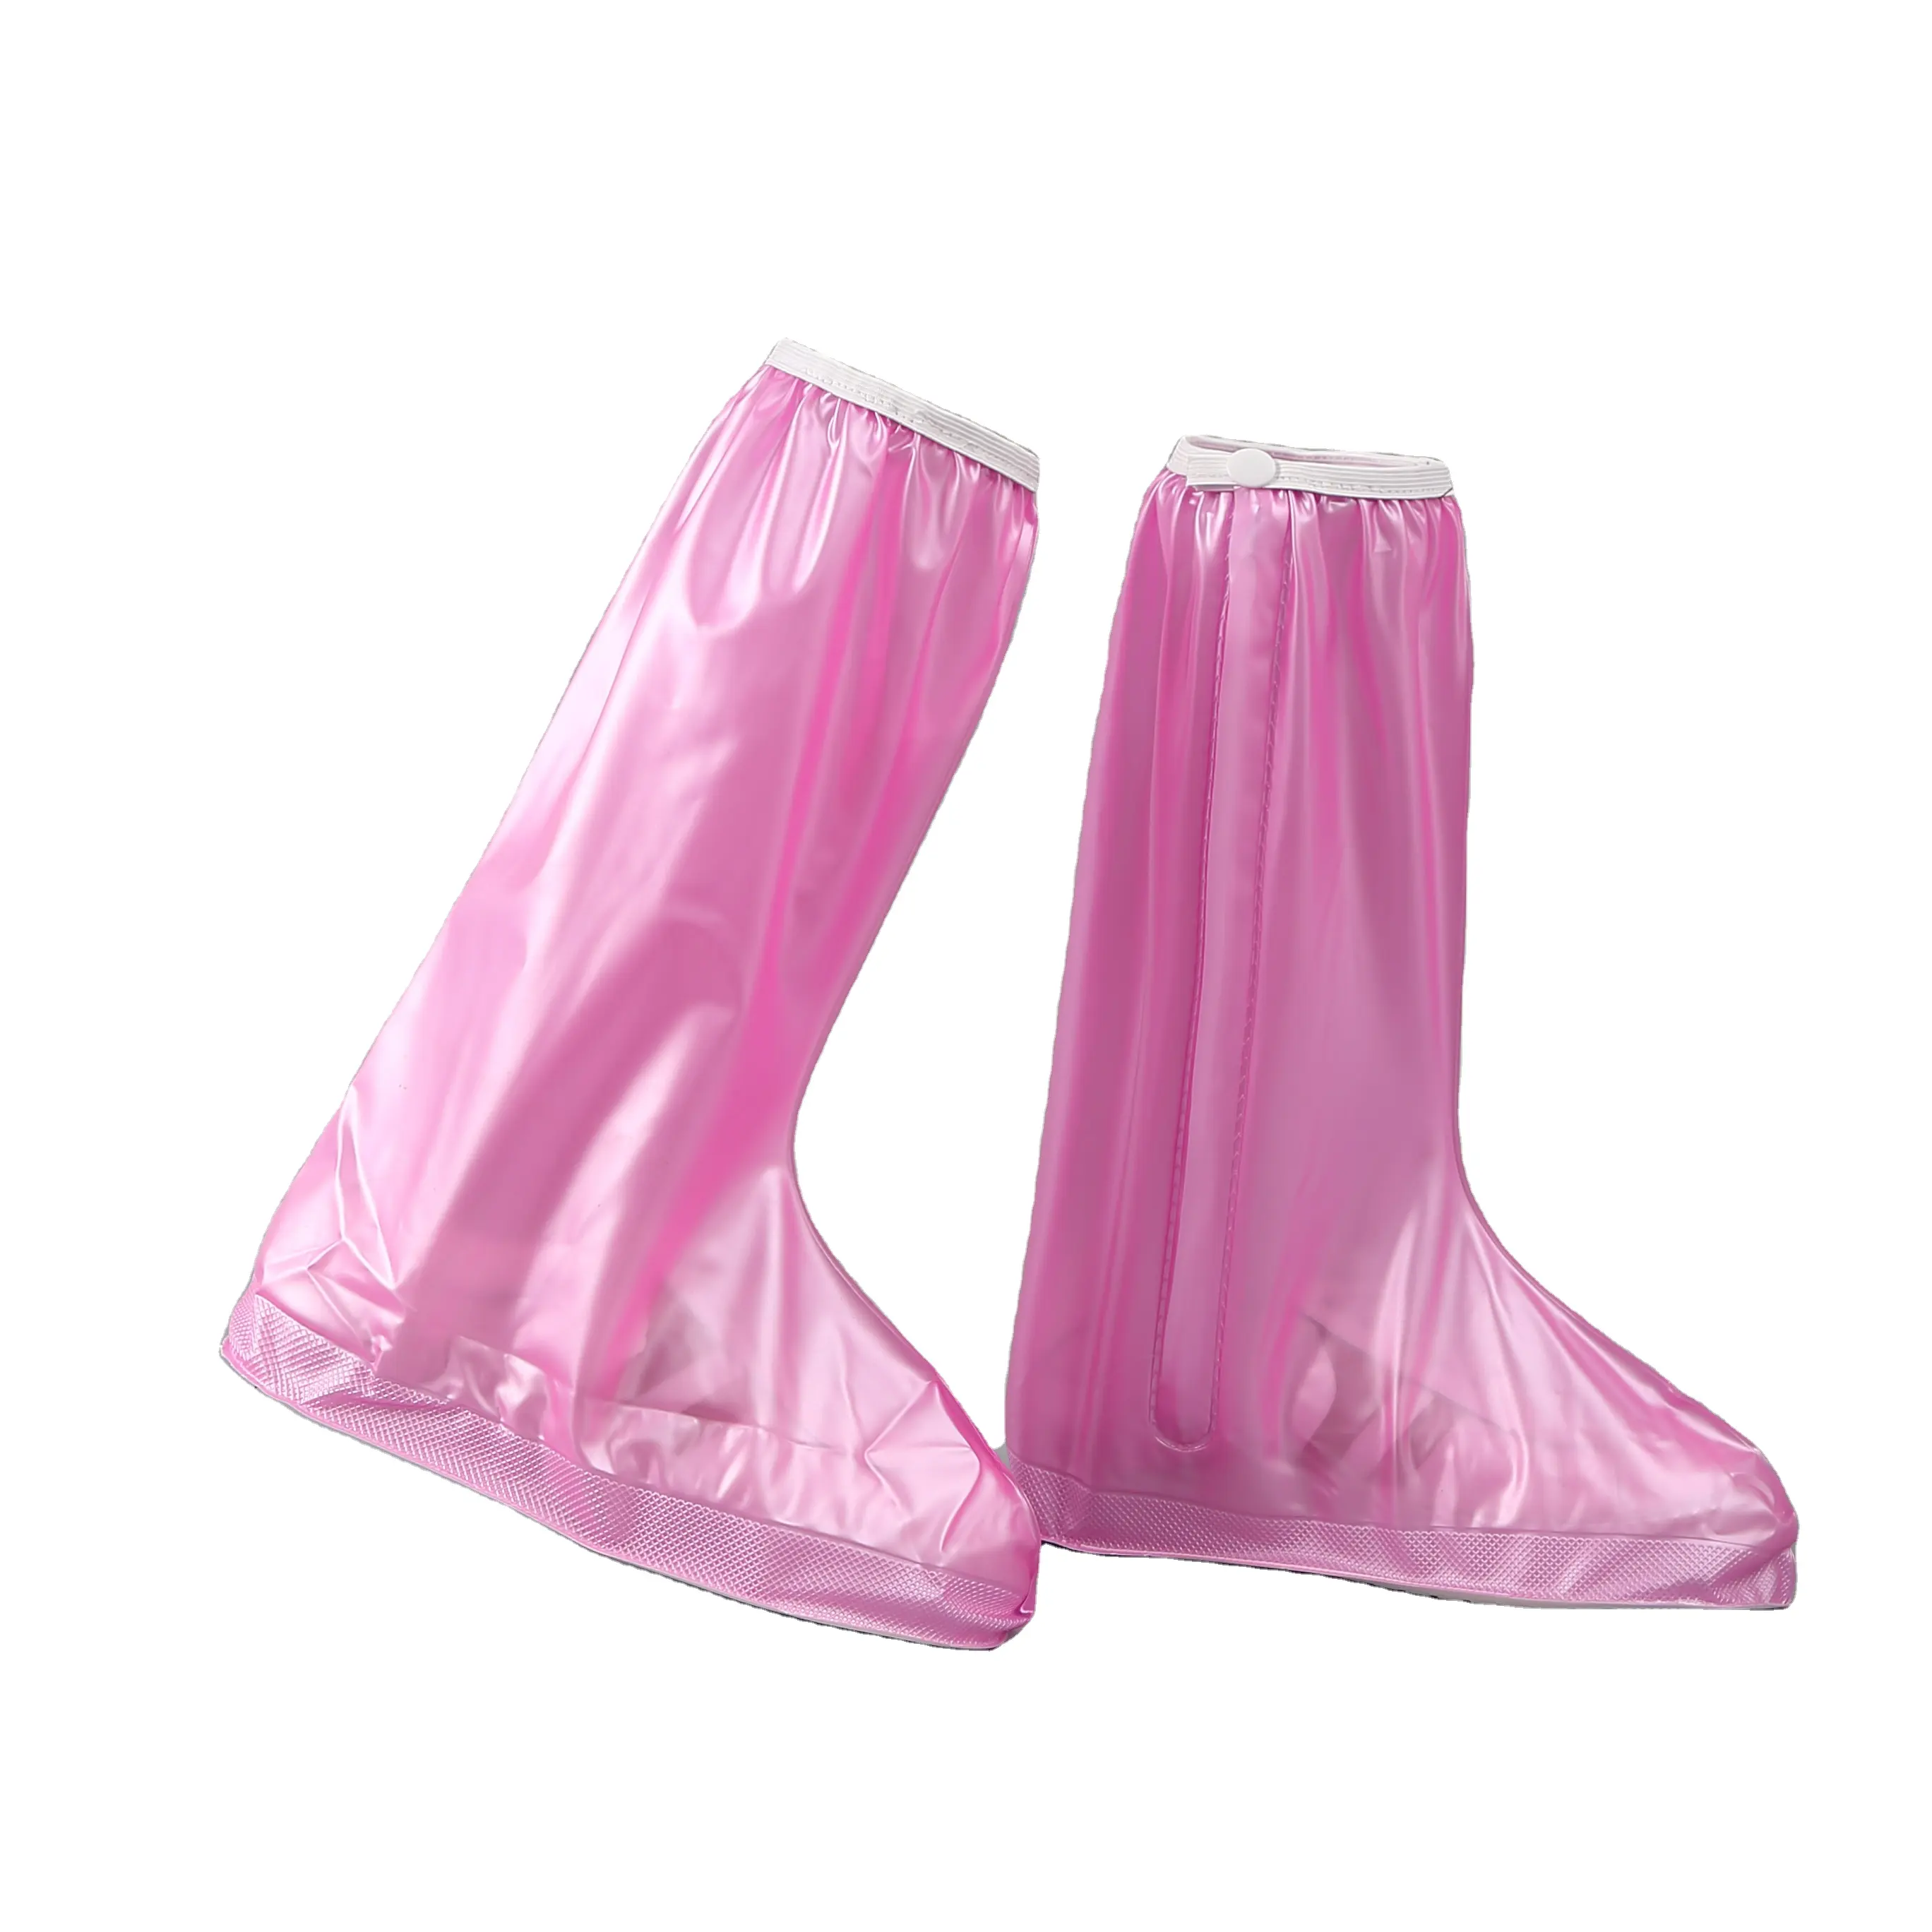 Бахилы на обувь ПВХ от воды и грязи LVR 819A S 35-36 25.5 см (Pink)